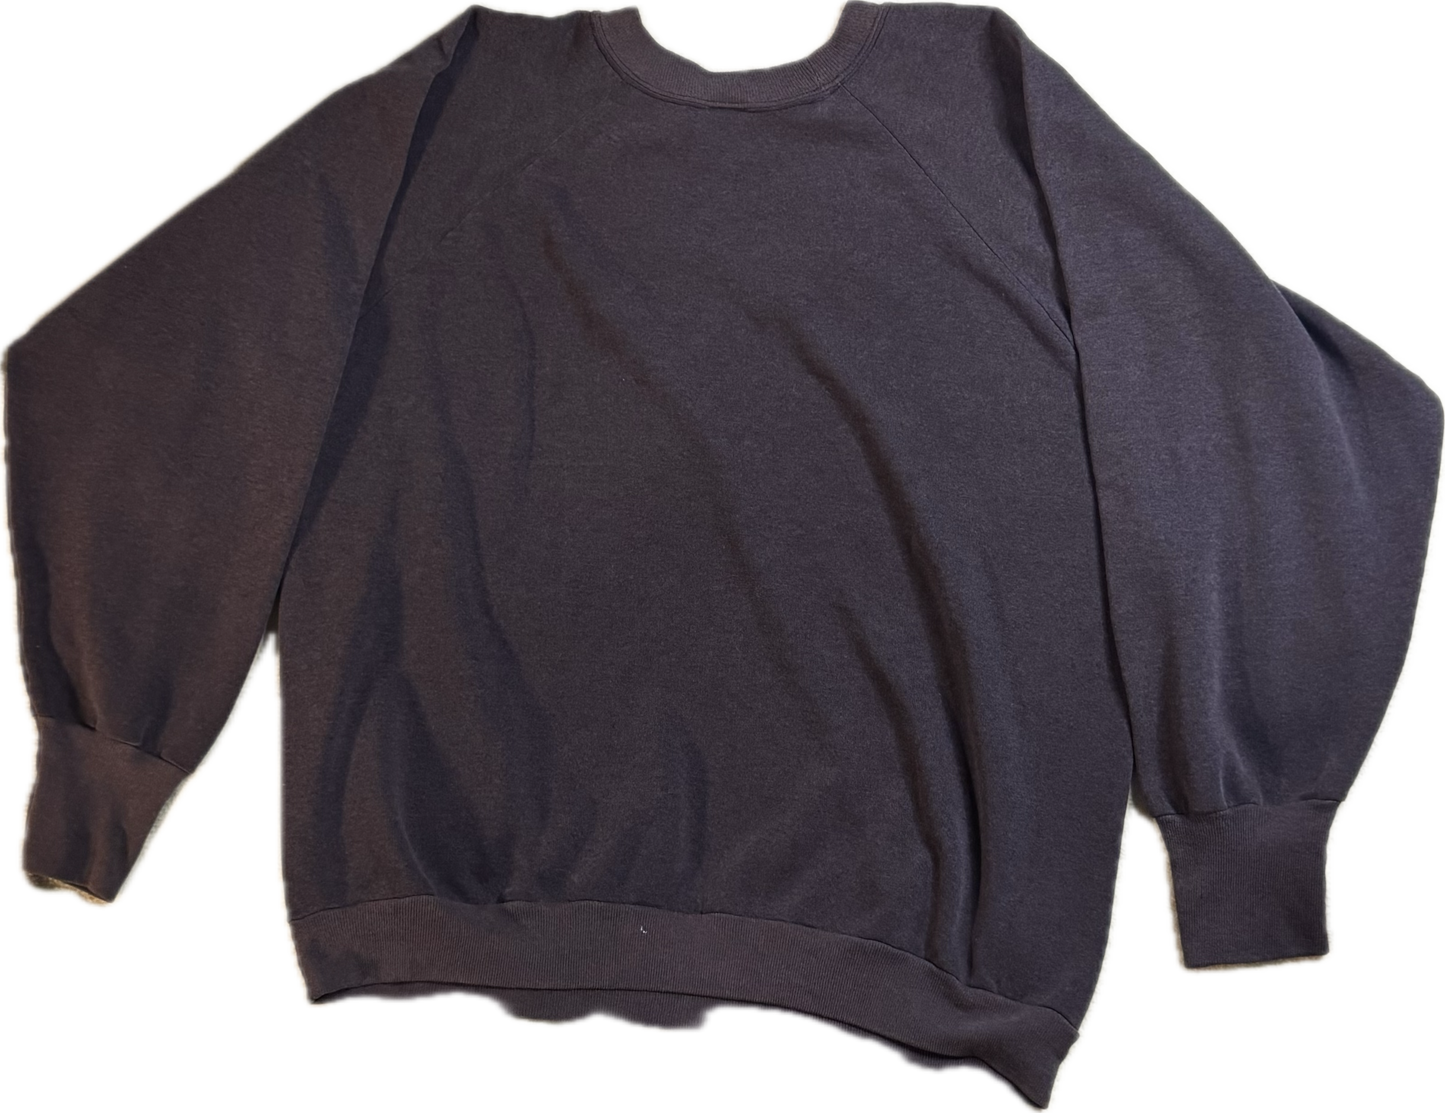 1987 Universal Studios Vintage Crewneck Sweatshirt